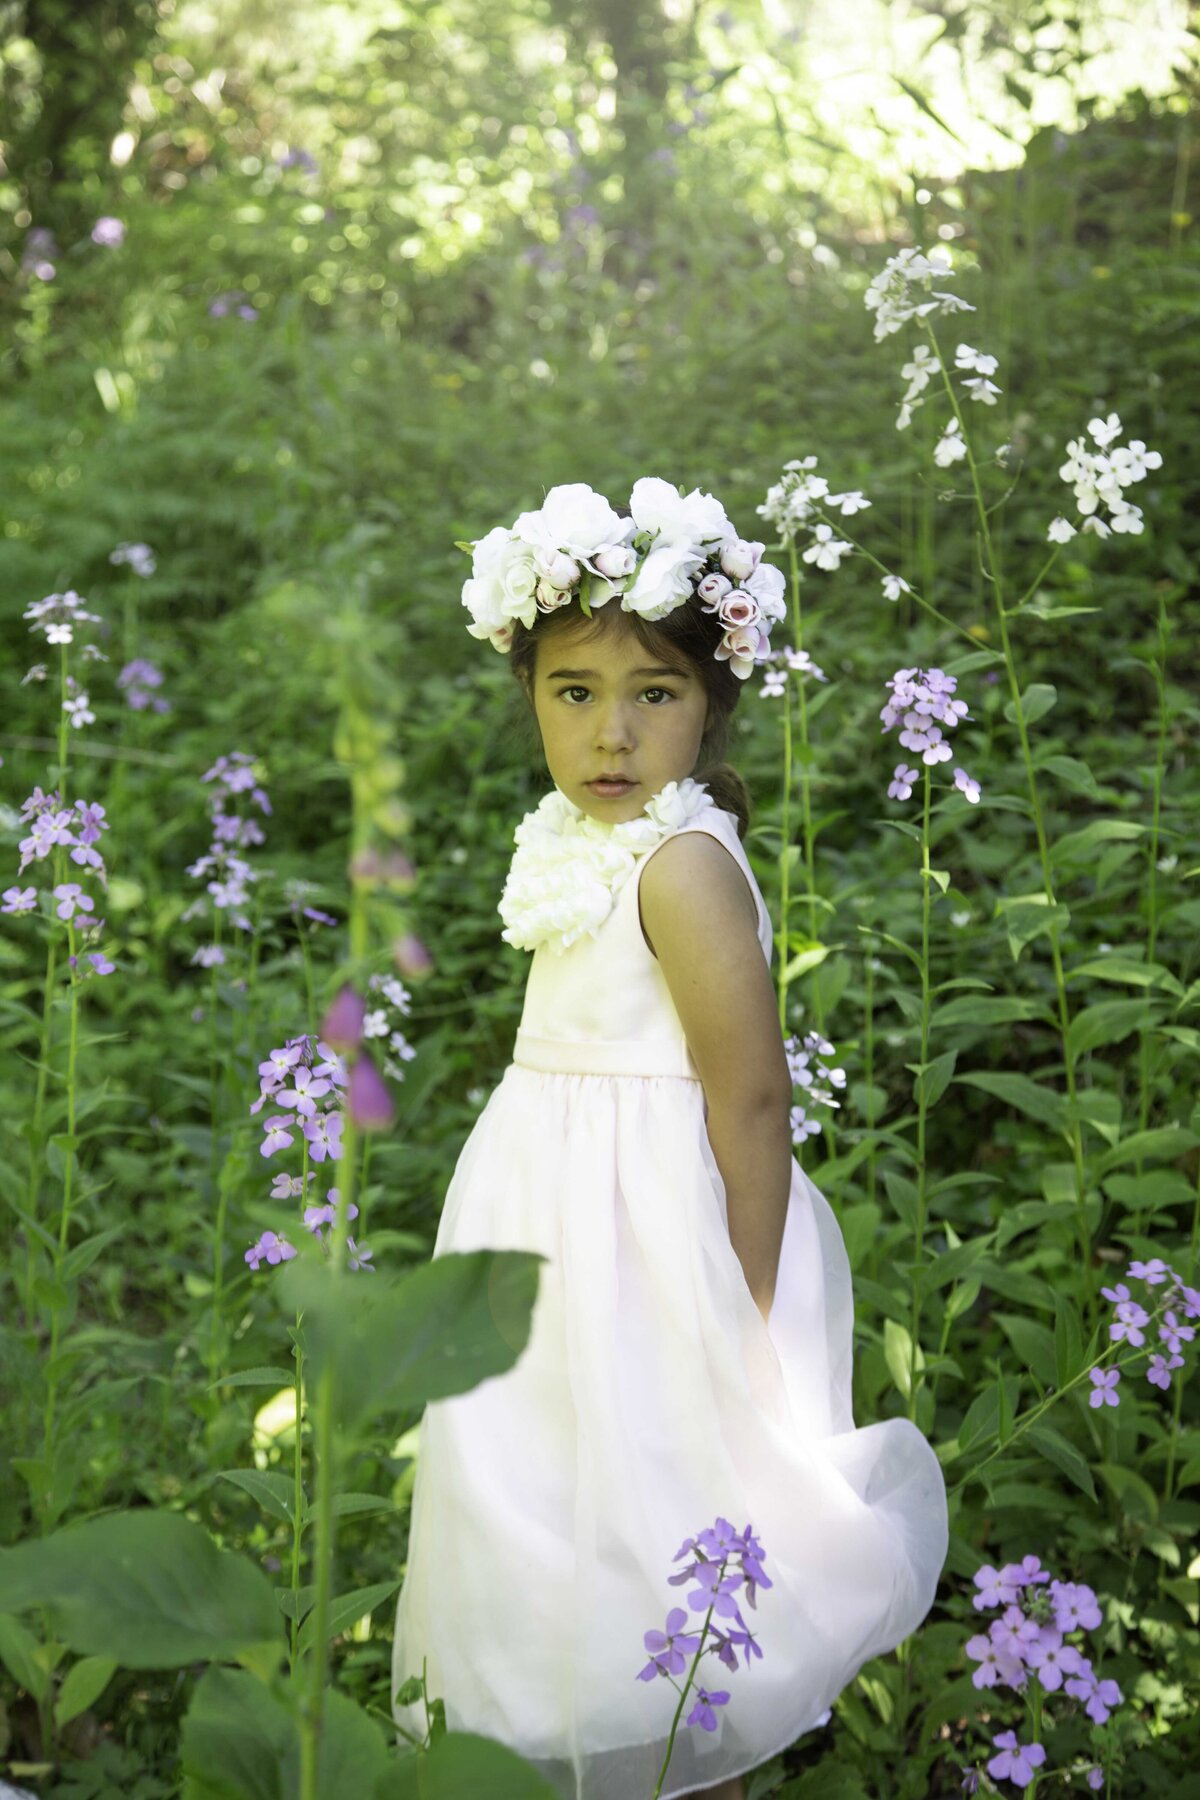 foxgloves-daisies-field-white-dress-floral-headpiece-stylist-photographer-debbie-steeper